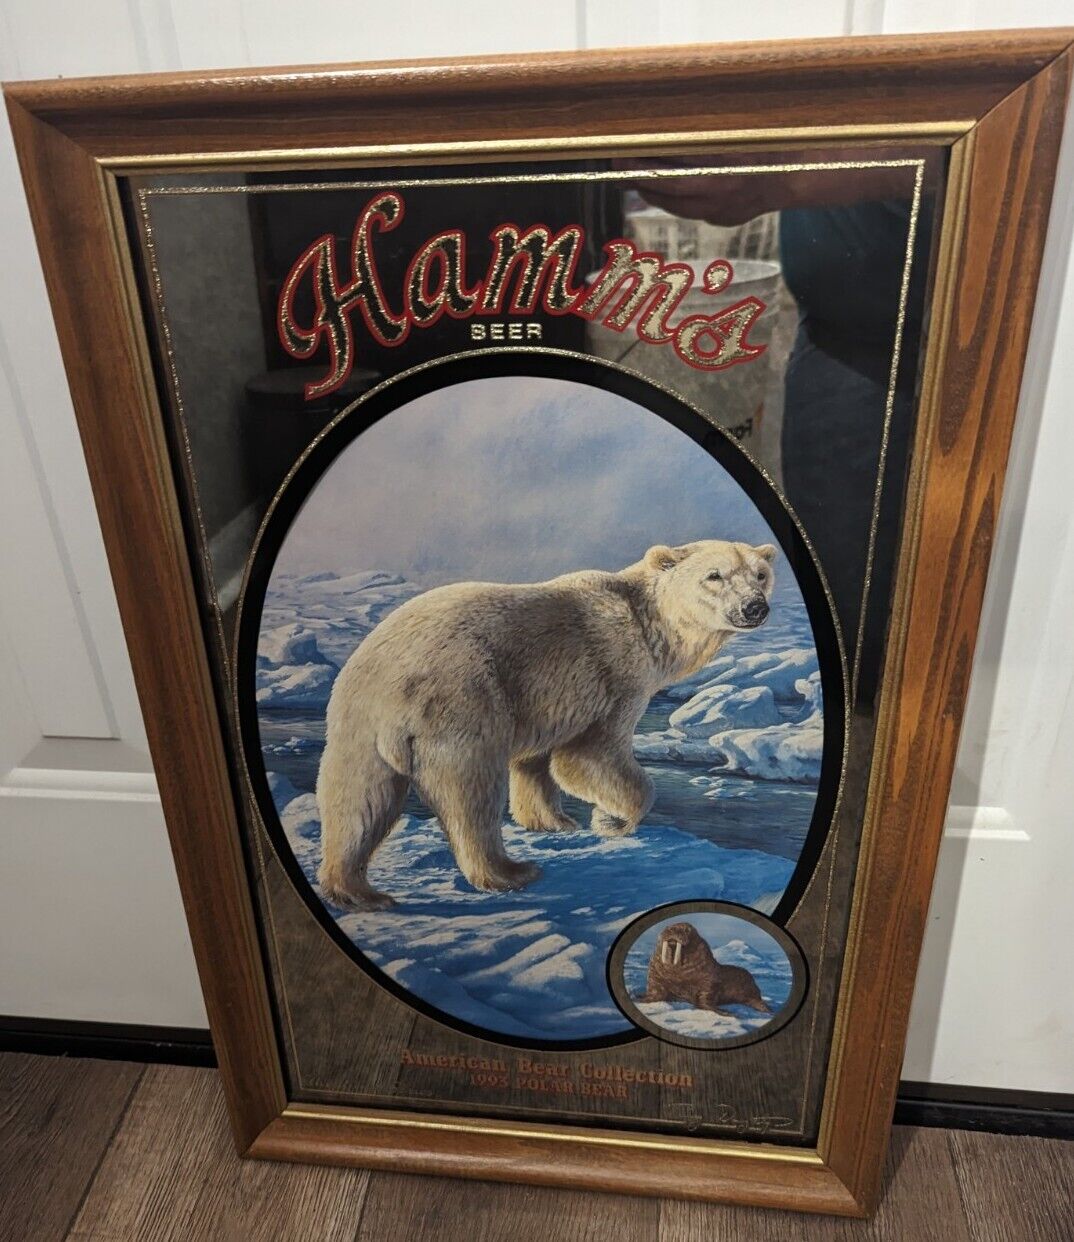 Hamms 1993 Polar bear Beer Mirror American collection Series Man cave Bar